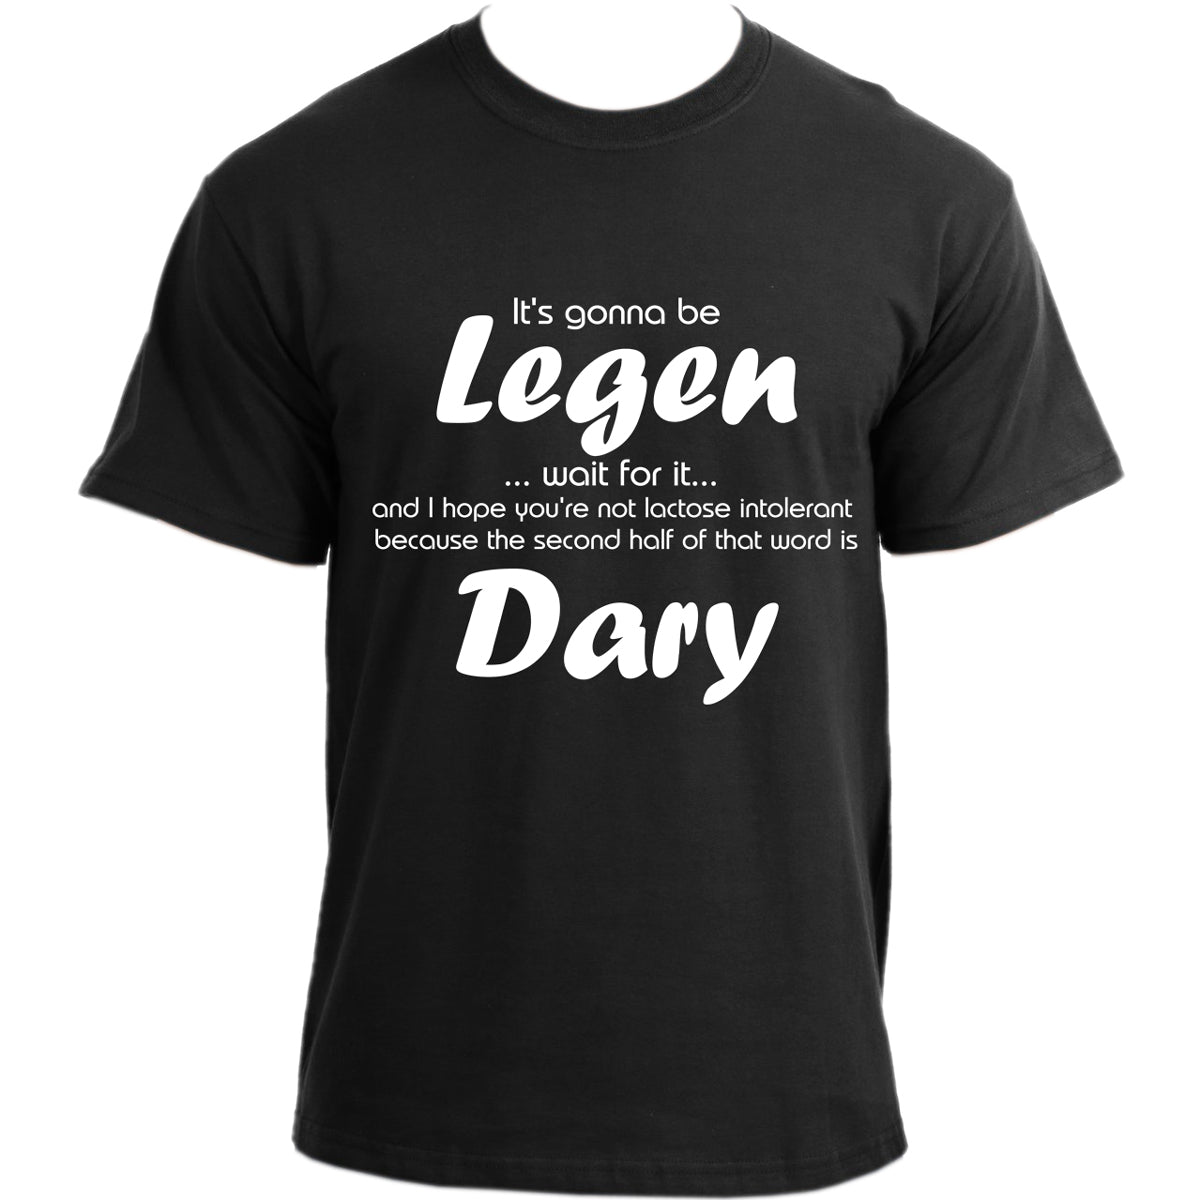 himym Barney Stinson Legendary "Wait for it" TV Series Inspired Funny T-Shirt